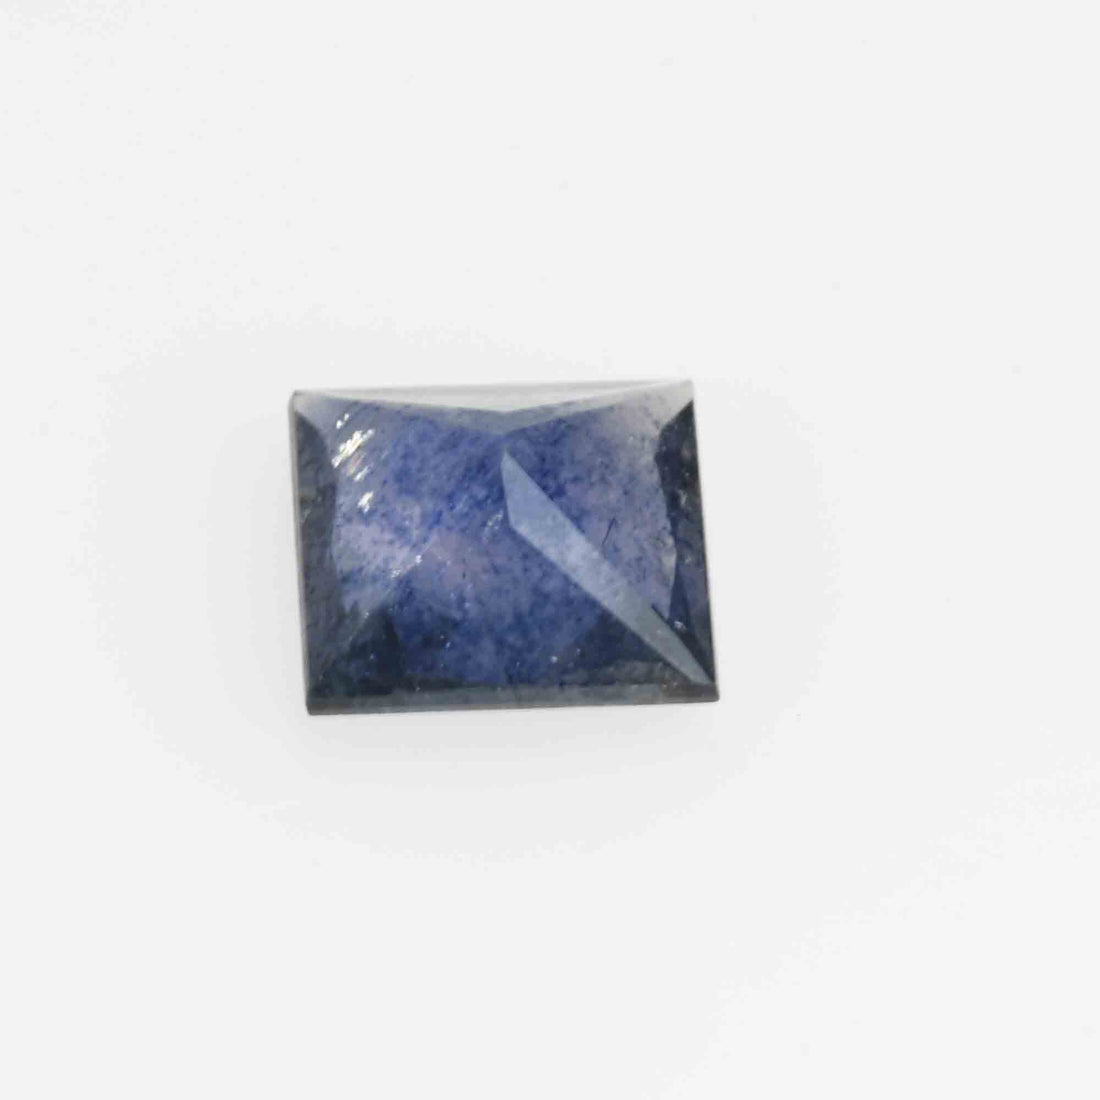 0.59 Cts Natural Blue Sapphire Loose Gemstone Princess Cut